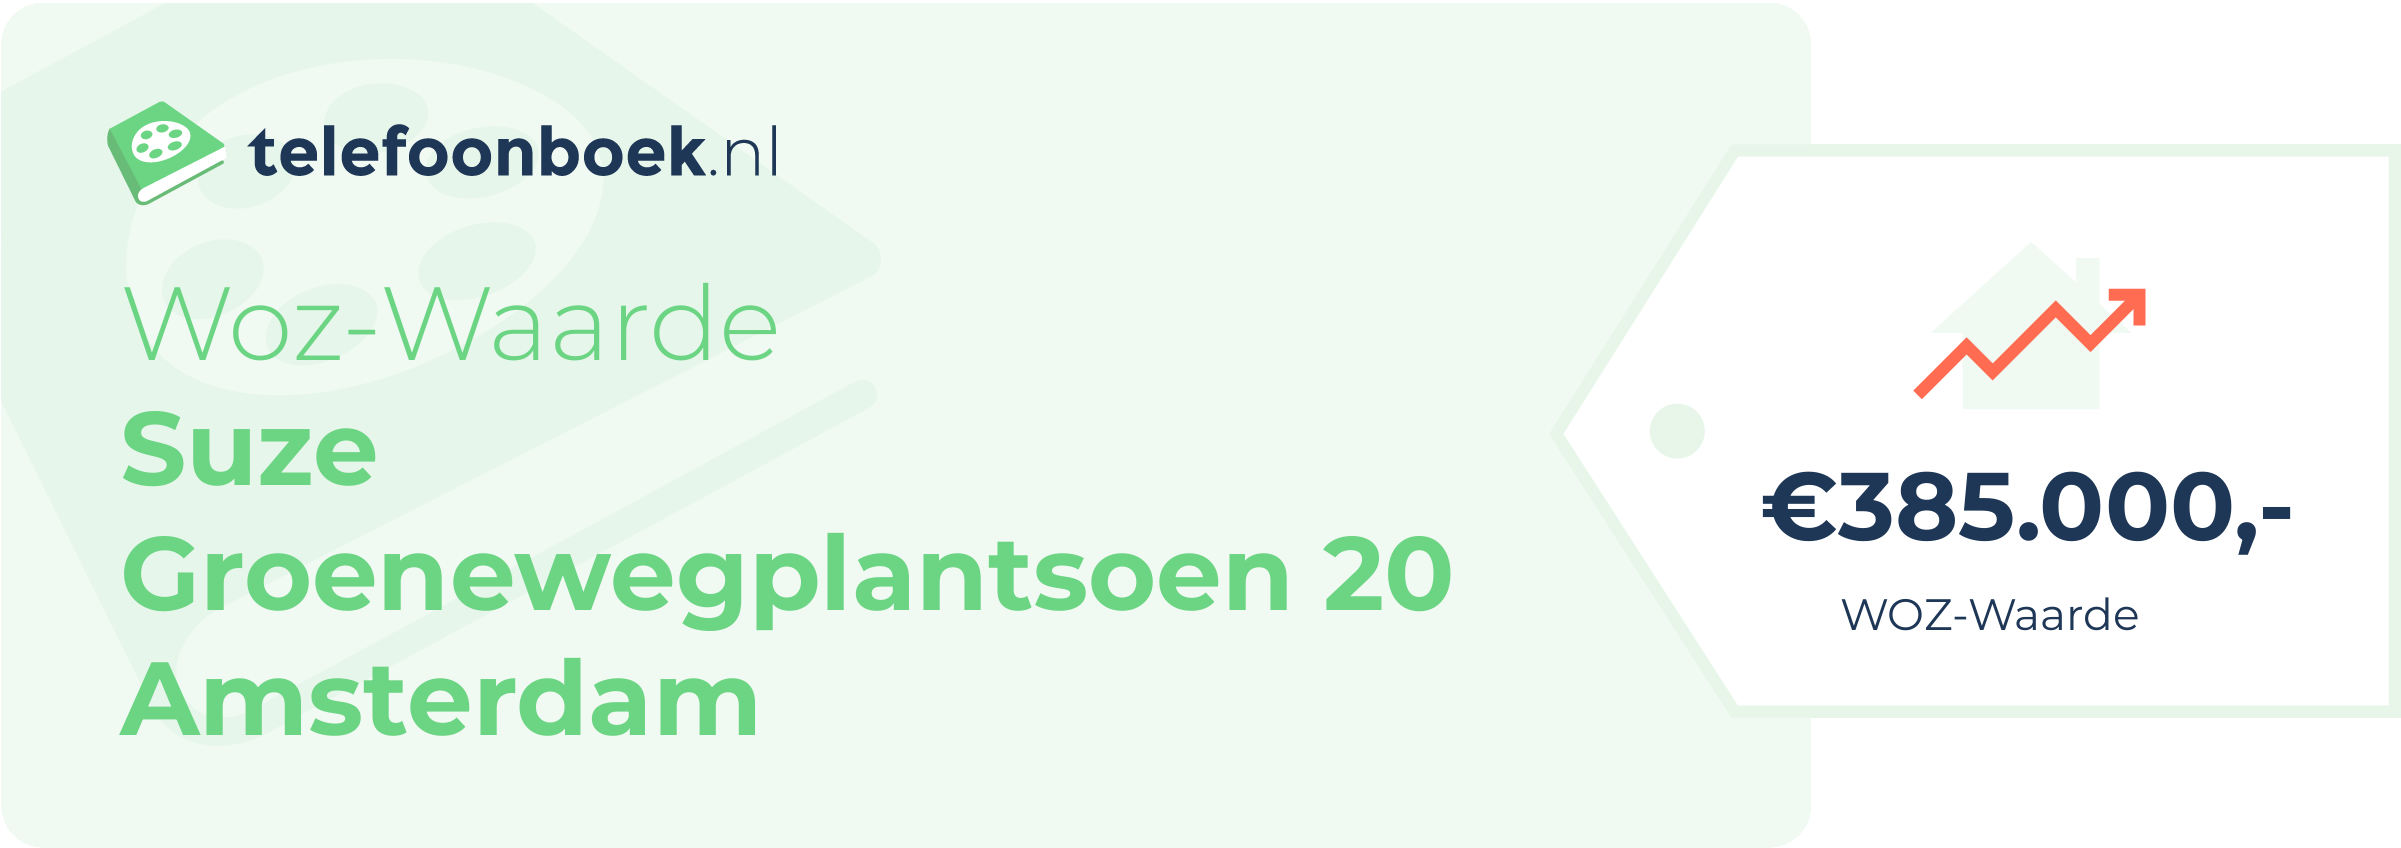 WOZ-waarde Suze Groenewegplantsoen 20 Amsterdam